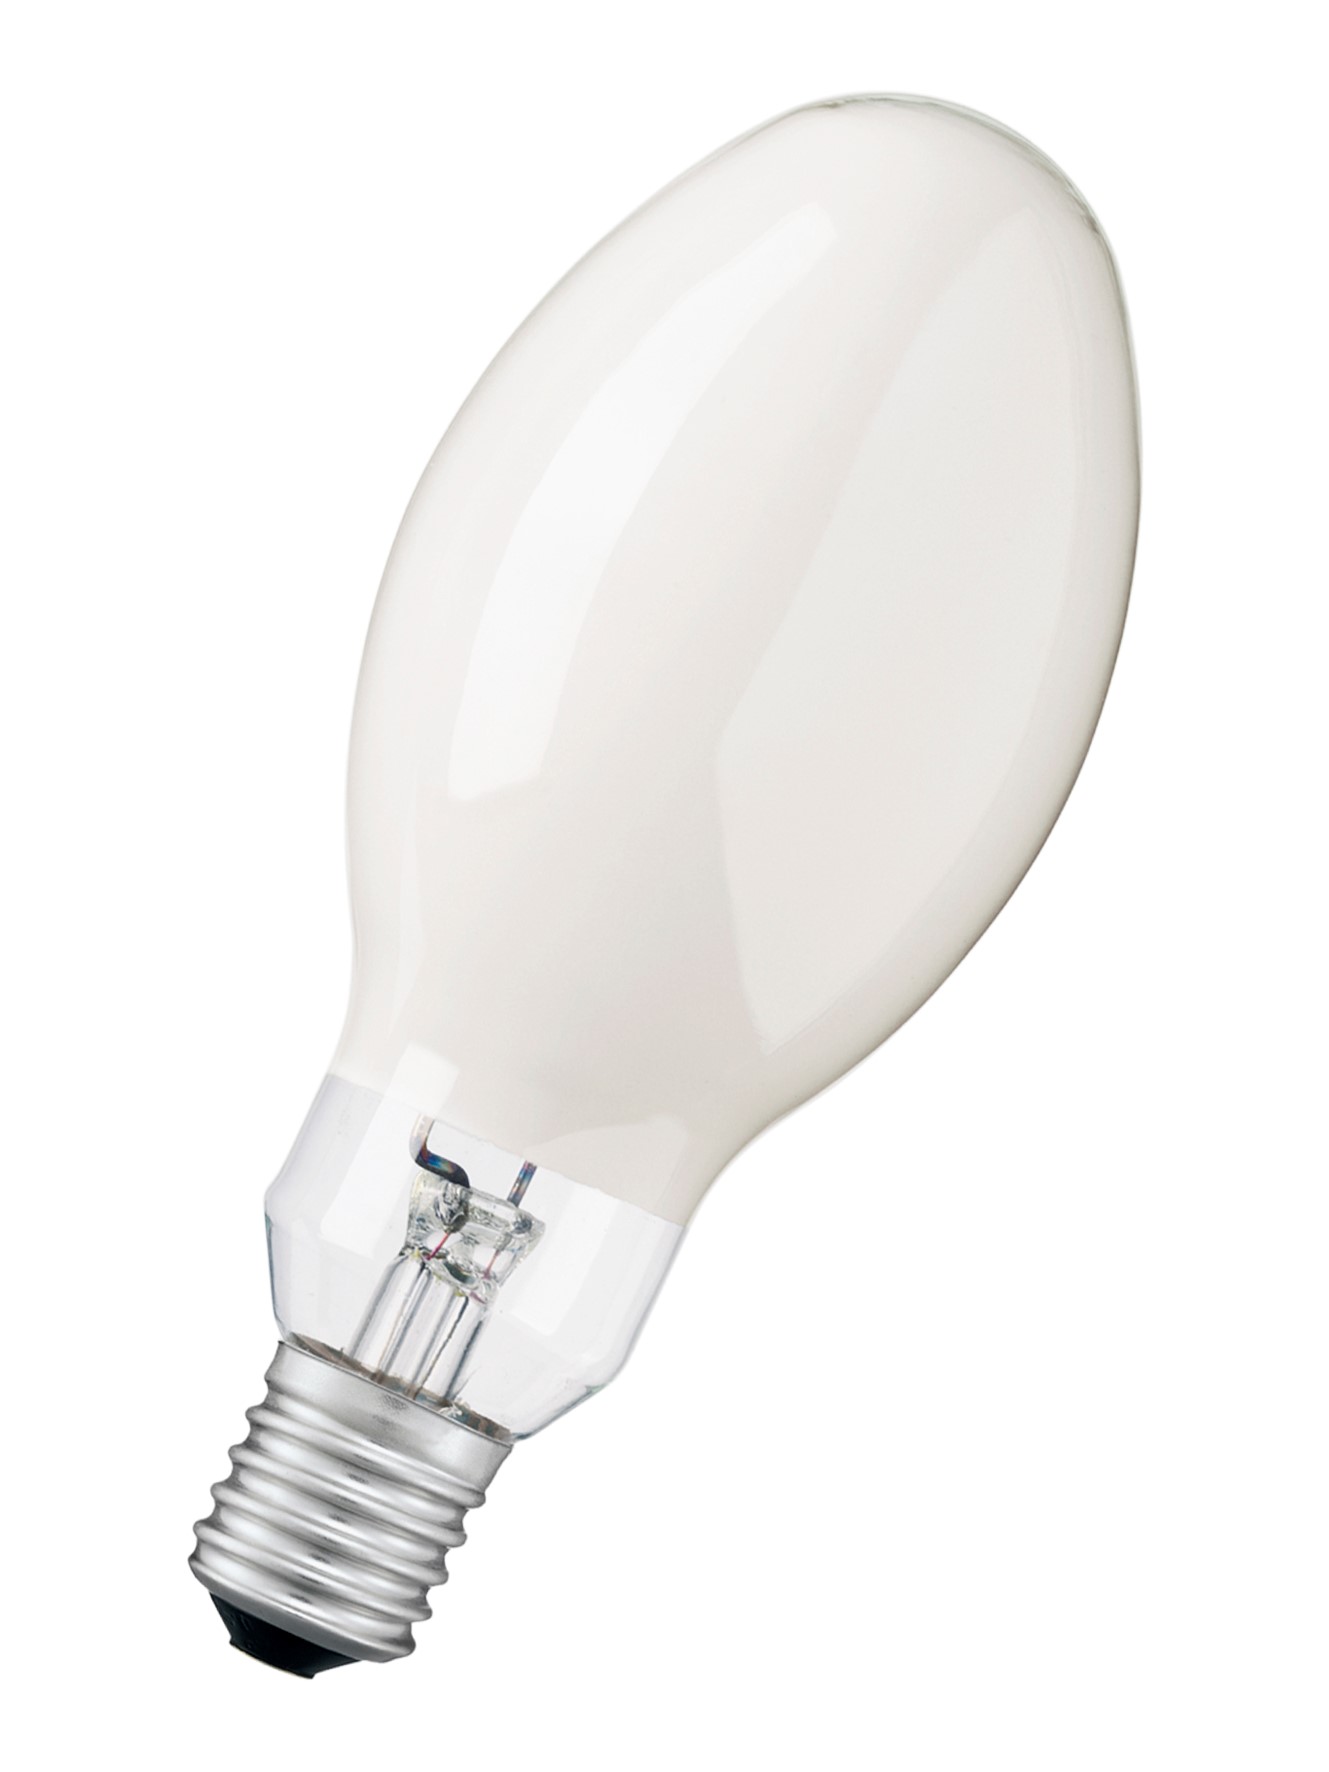 Self Ballasted Mercury Light Bulbs 160WSB/ED23/DX 230-240V E27 Case of 6